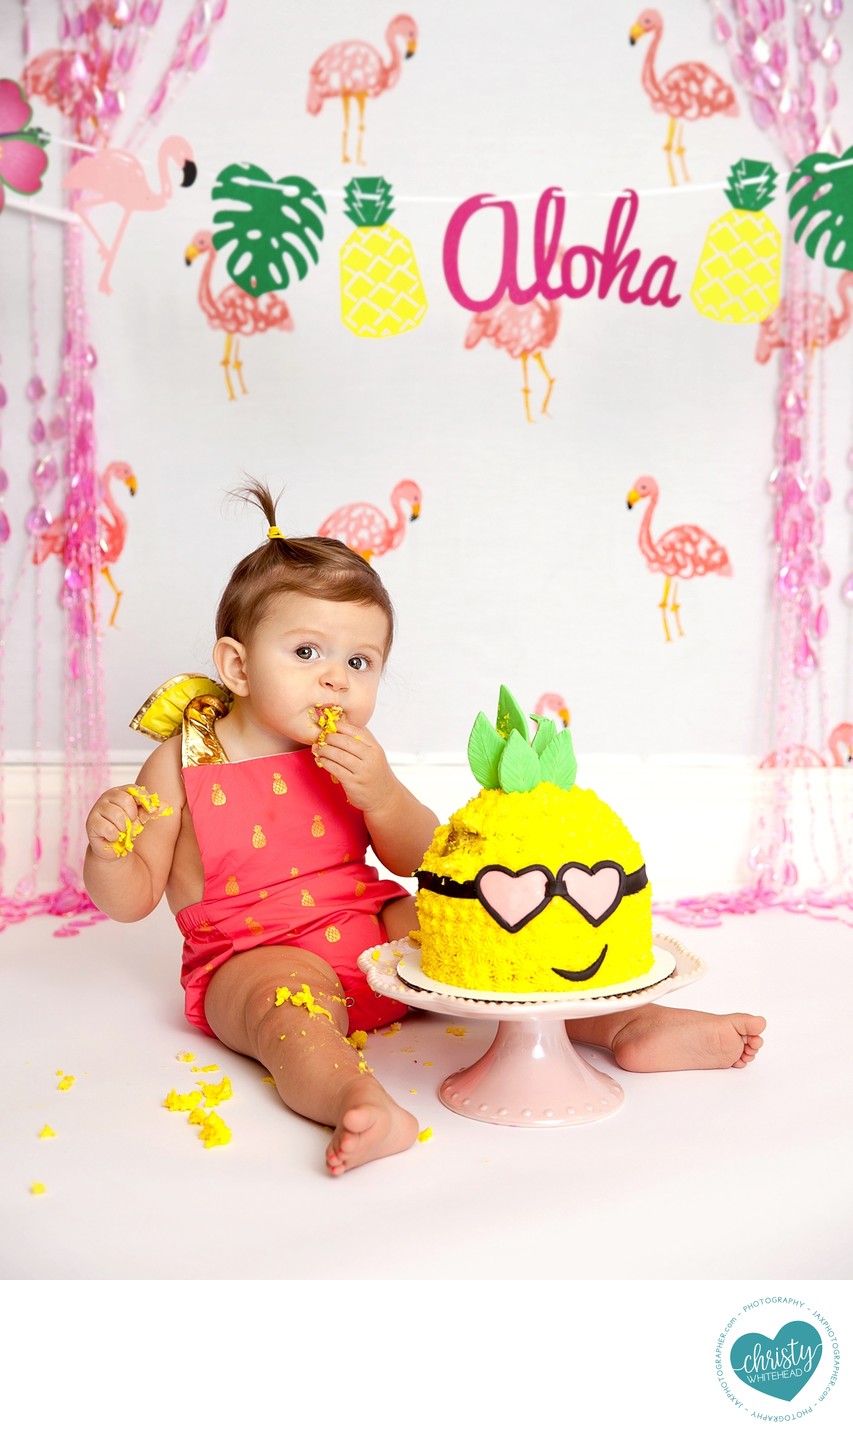 Baby With Her Pineapple Aloha Cake Christy Whitehead 